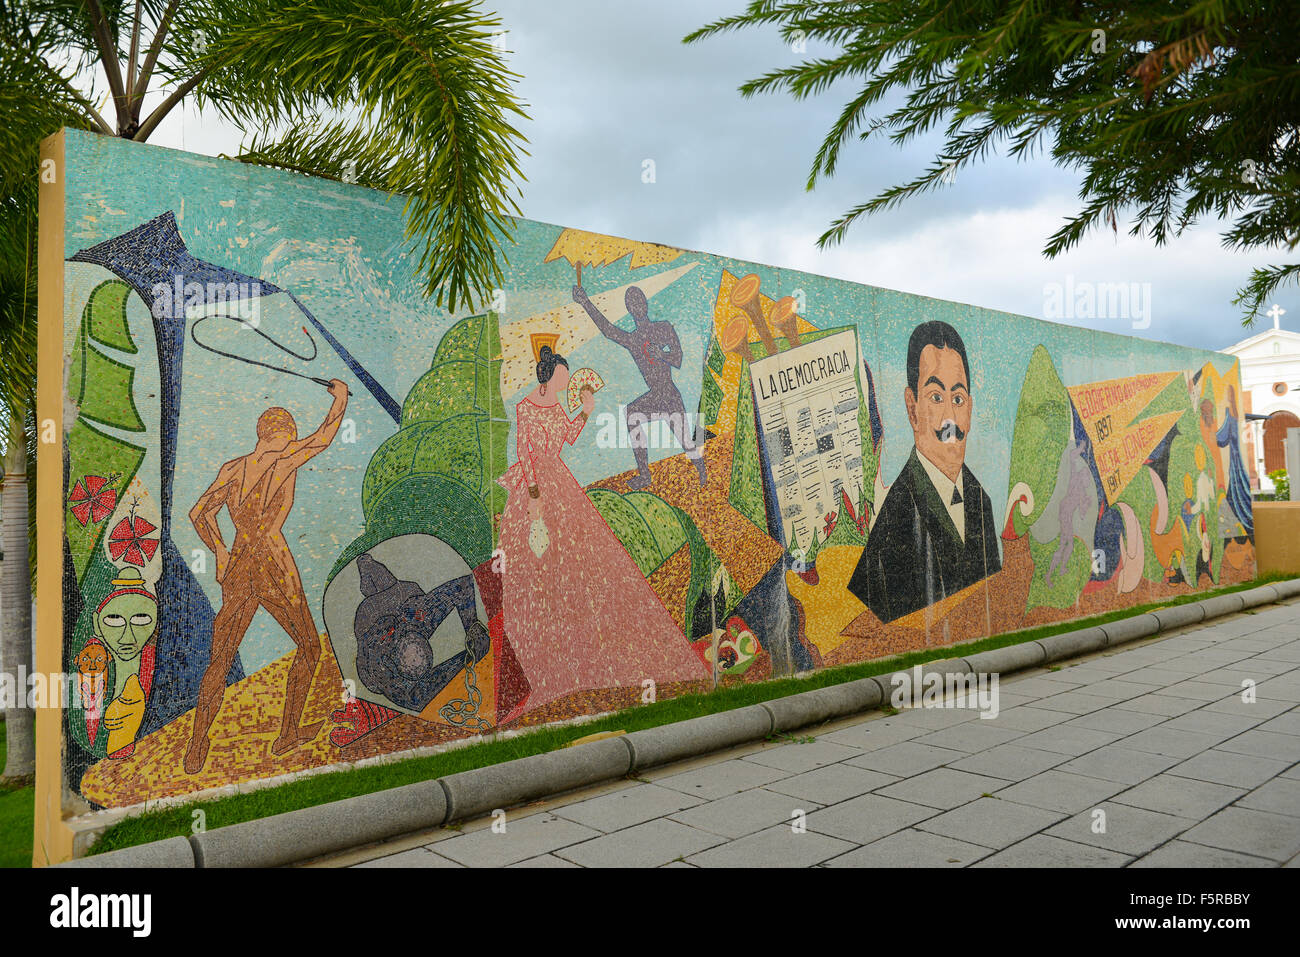 Paseo De La Historia Mosaik Wandbild des Künstlers Cecilia Orta. Manati, Puerto Rico. Territorium der USA. Karibik-Insel Stockfoto